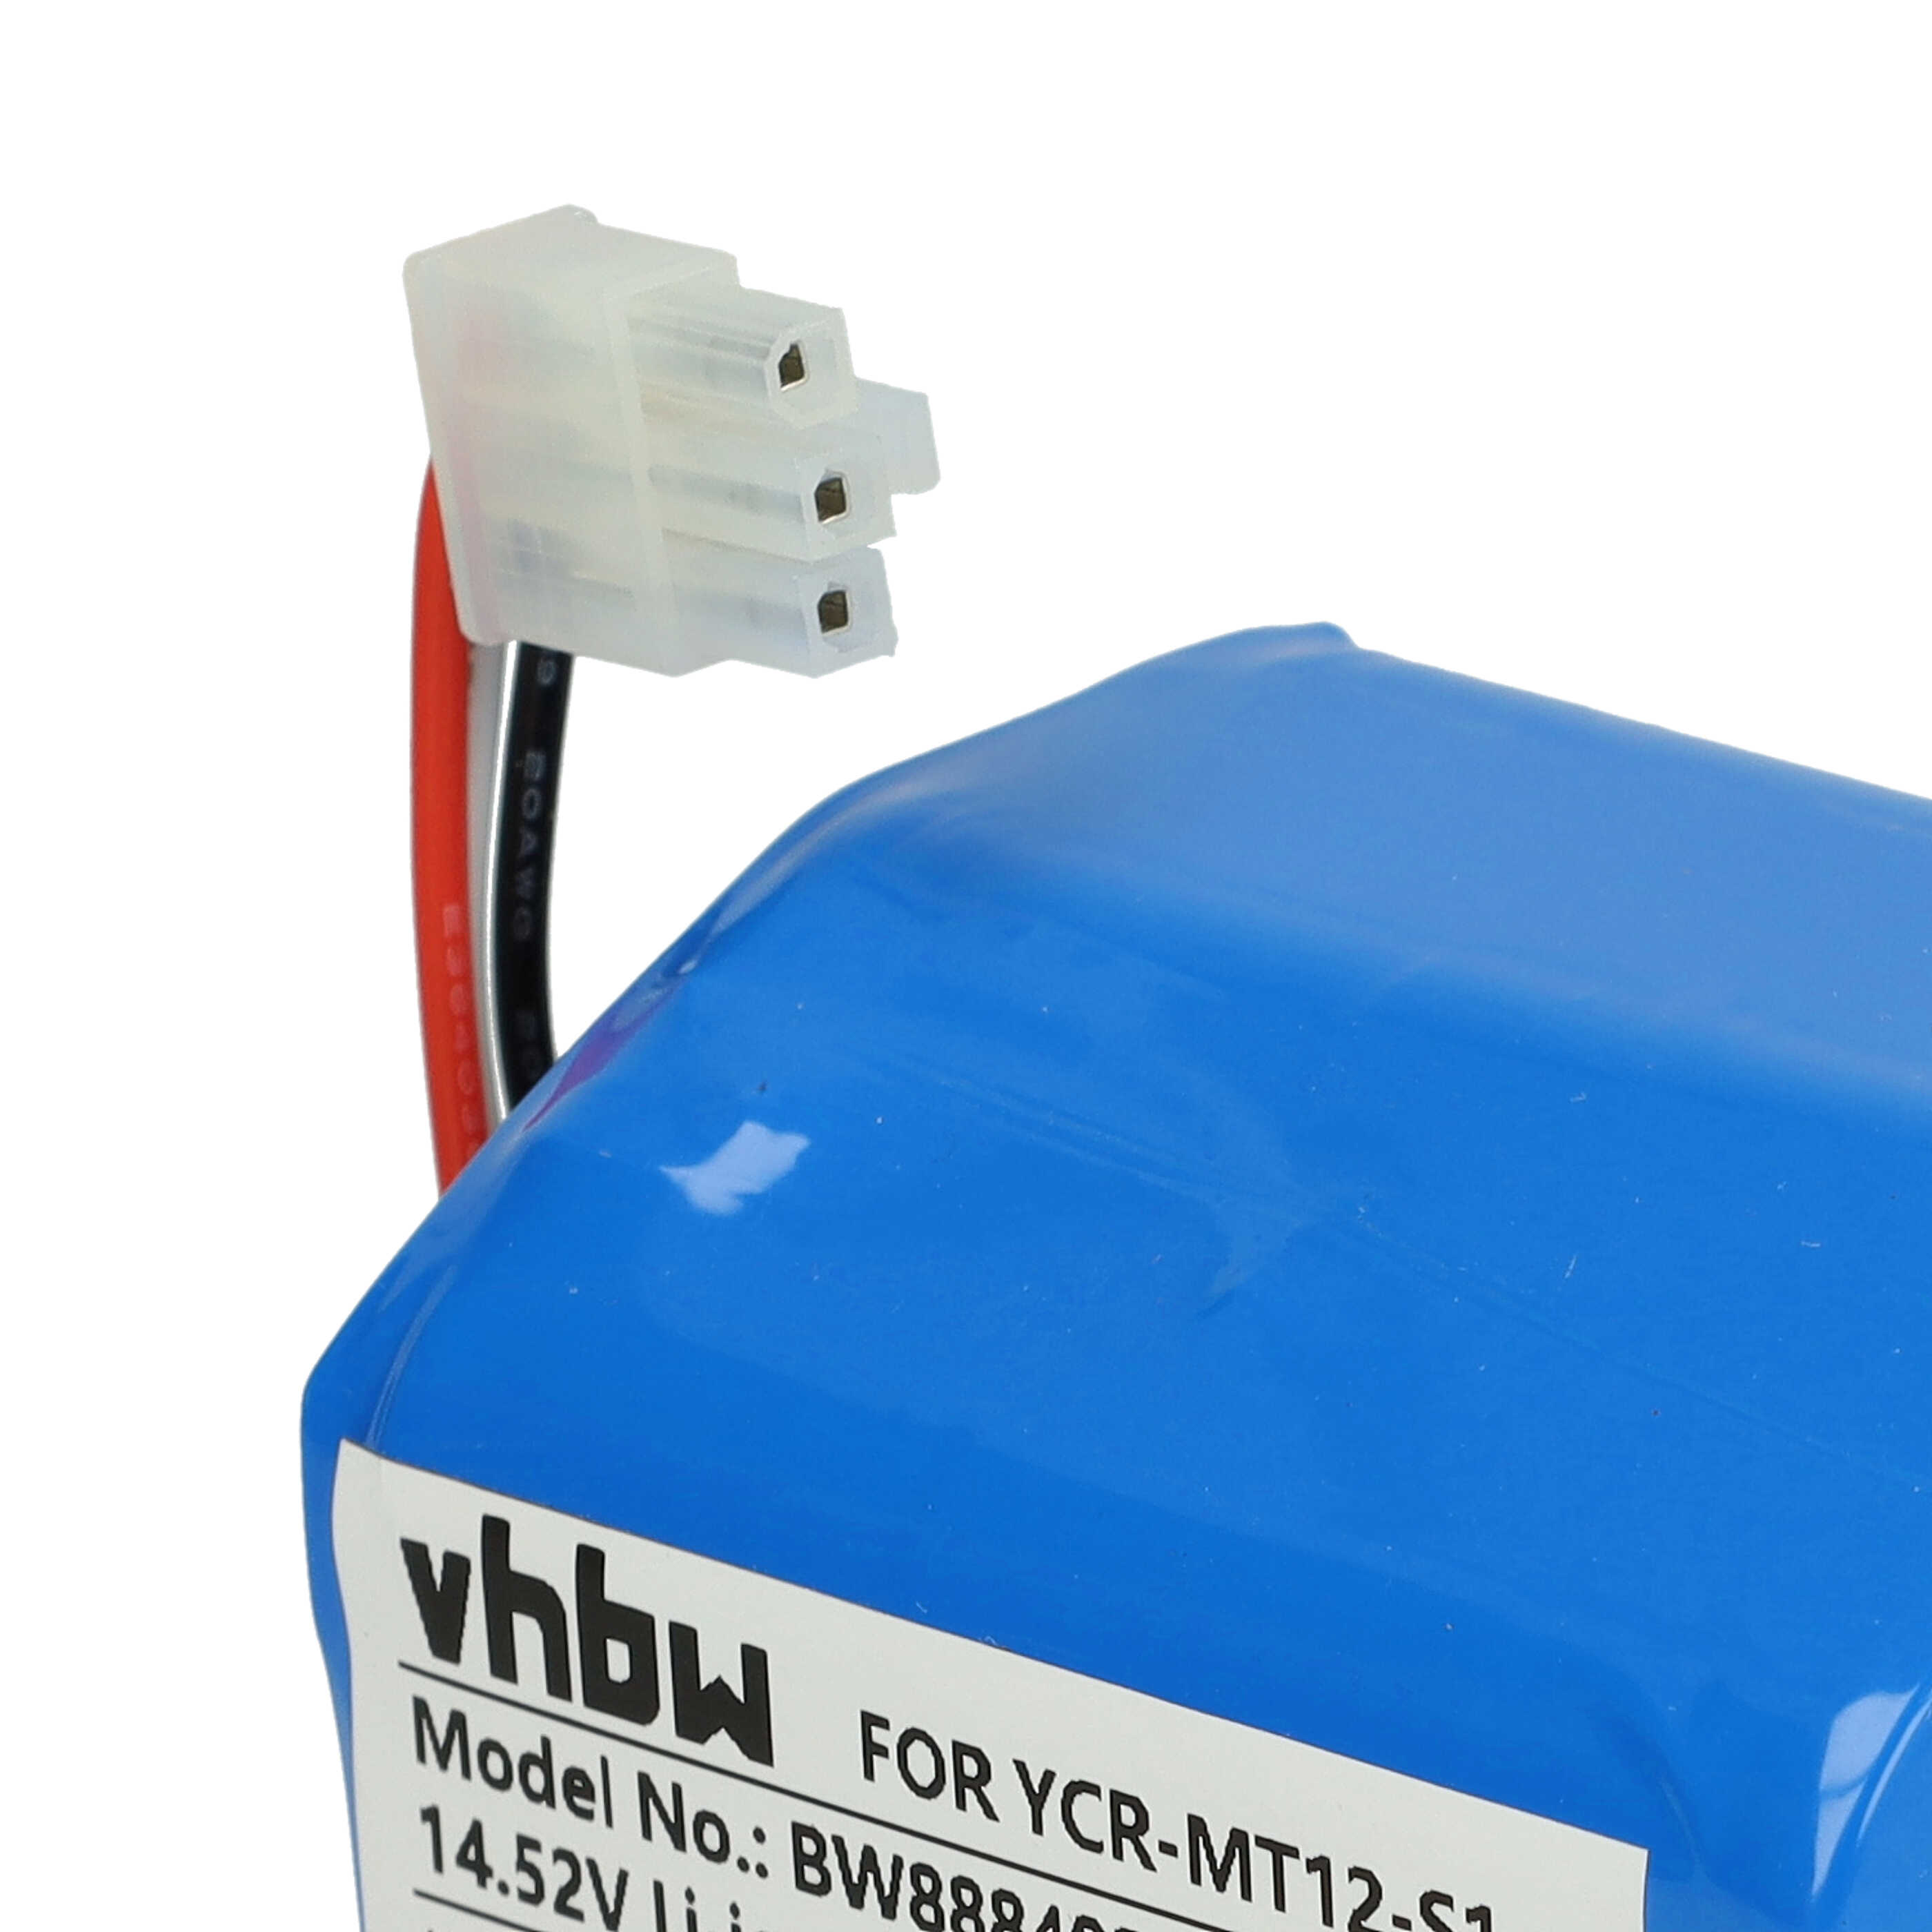 Batteria sostituisce iClebo YCR-M07-20W, YCR-MT12-S1 per robot aspiratore iClebo - 6000mAh 14,52V Li-Ion